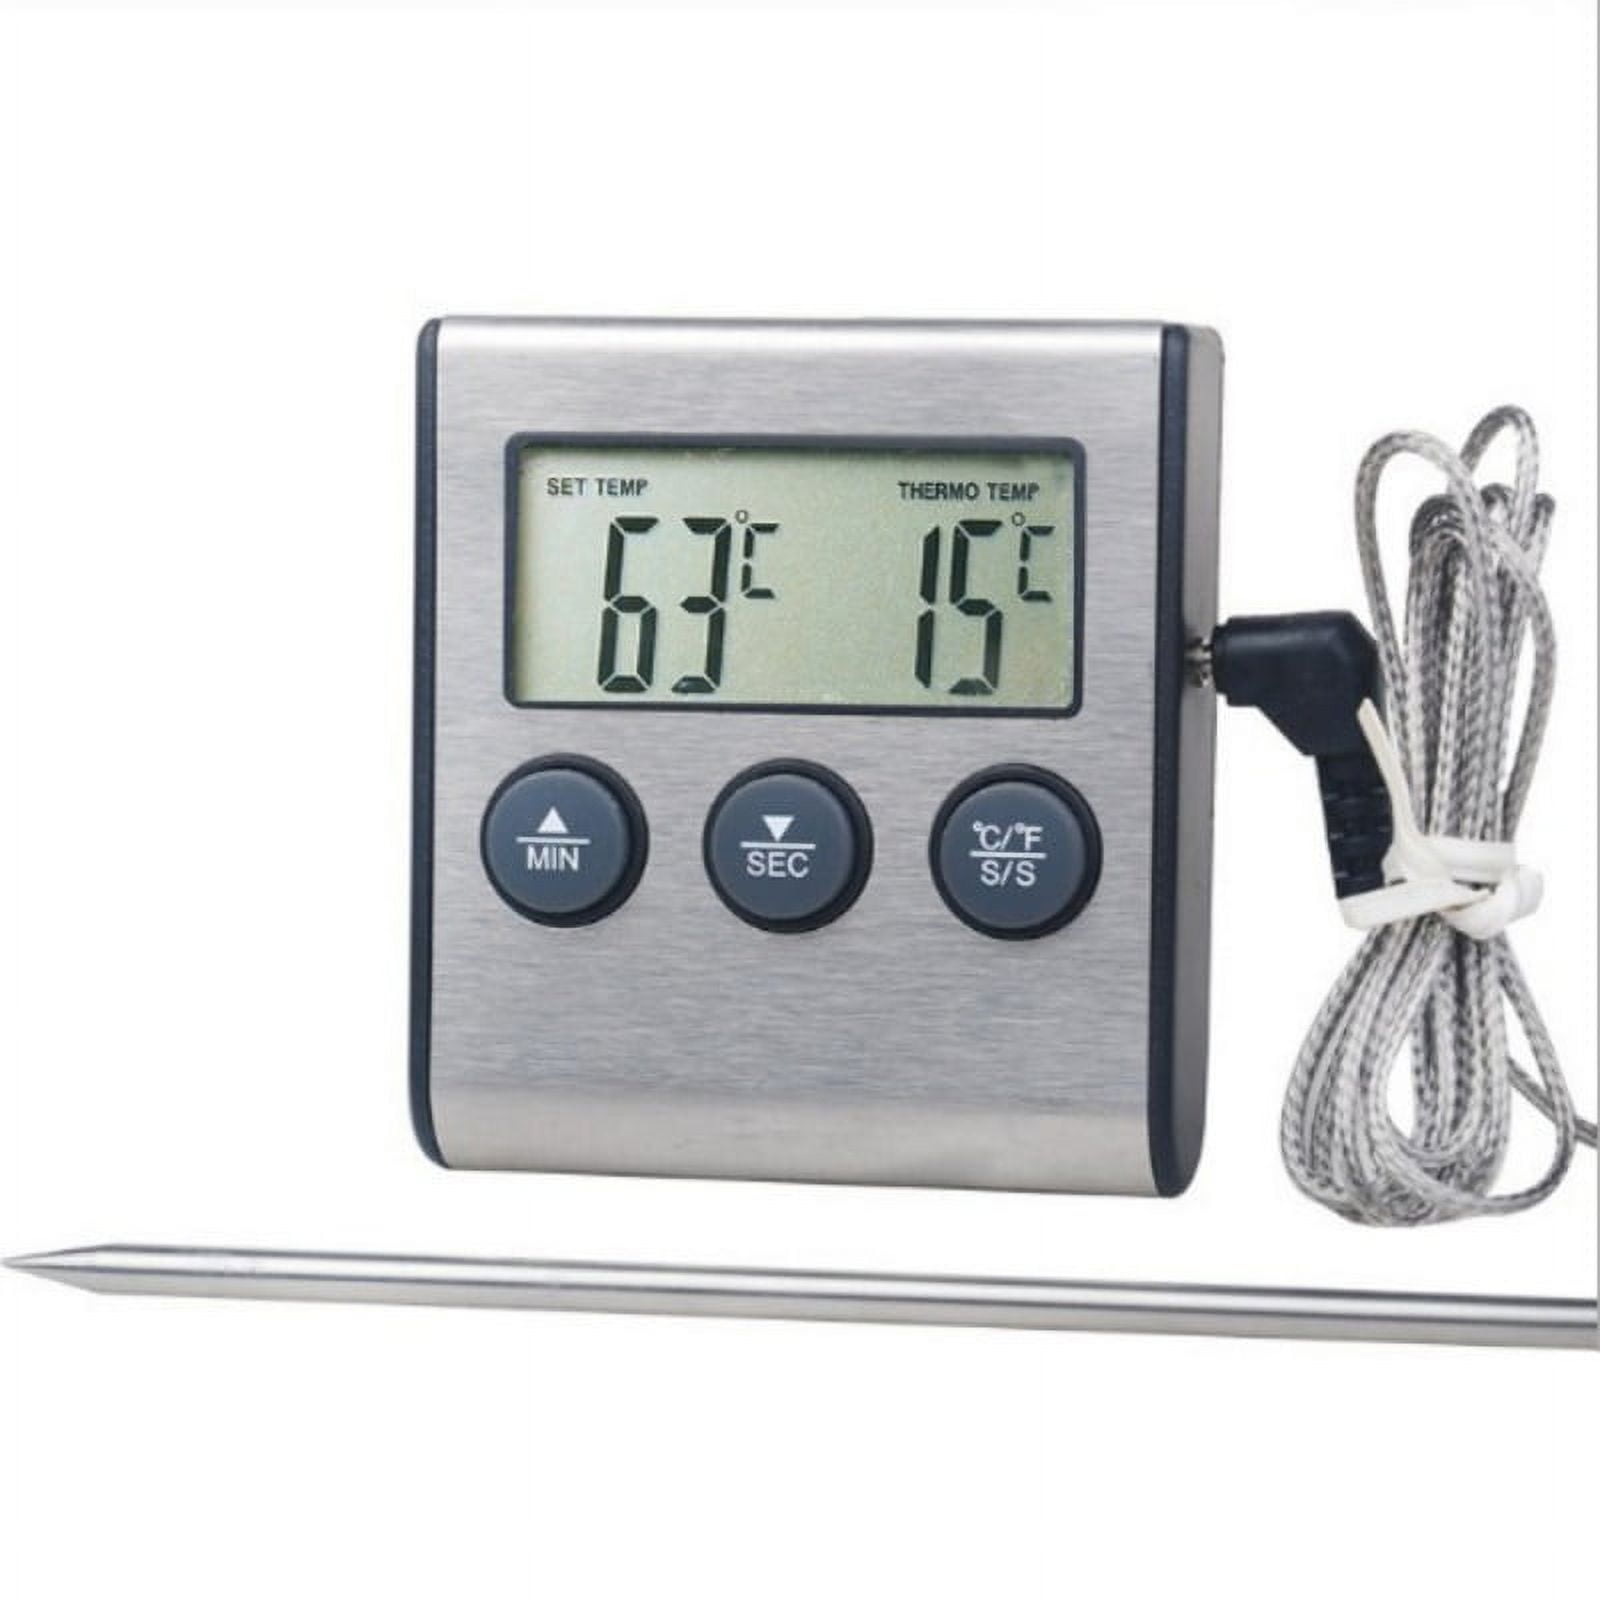 PITBULL Digital Meat Thermometer Cooking Food Kitchen BBQ Probe Water Milk  Oil Liquid Oven Digital Temperaure Sensor Meter Thermocouple